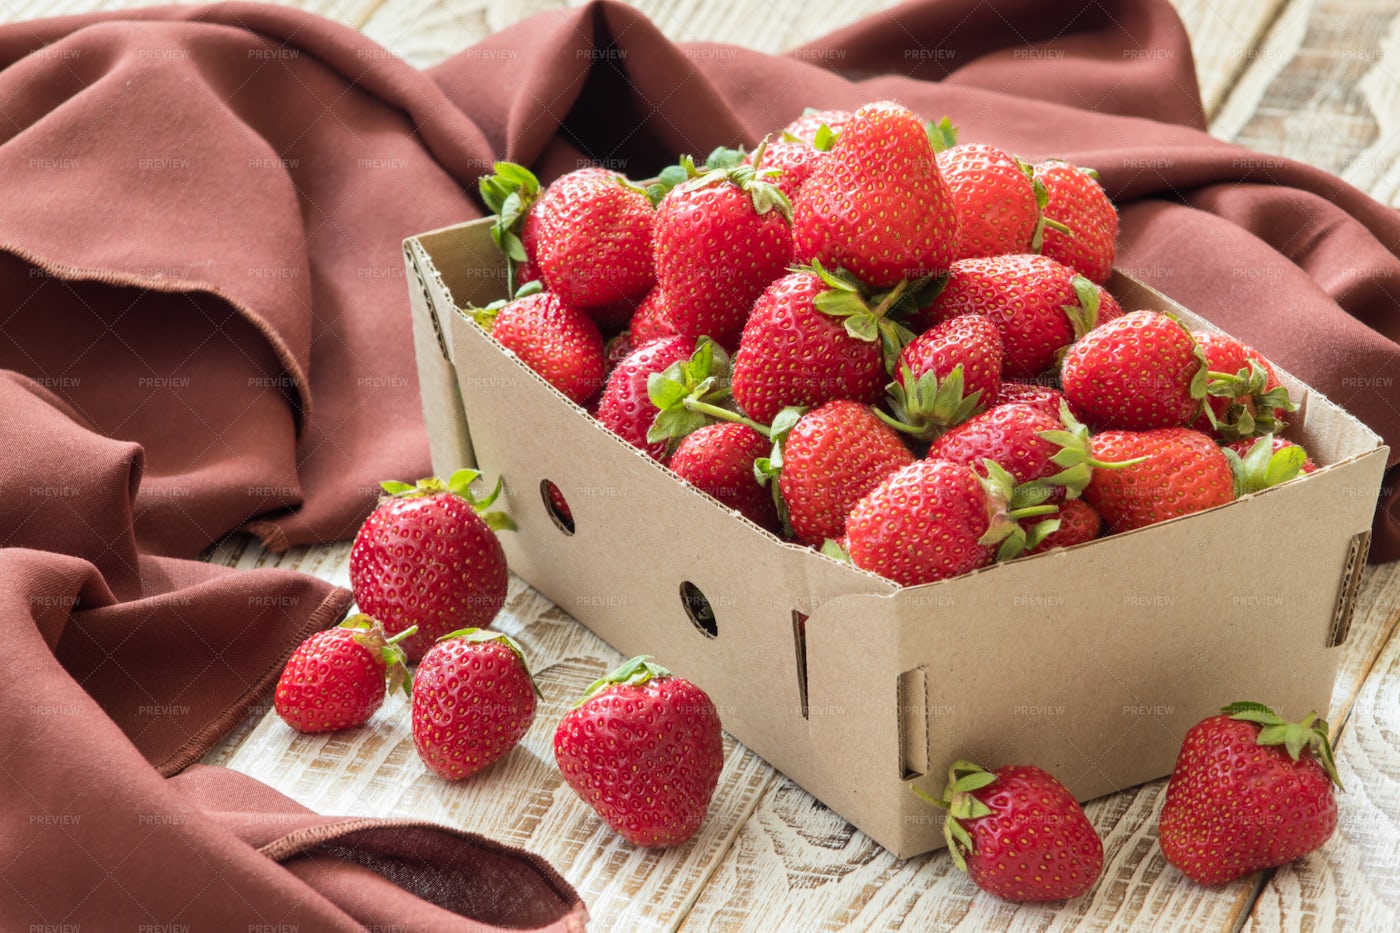 Strawberries In Cardboard Box: Stock Photos